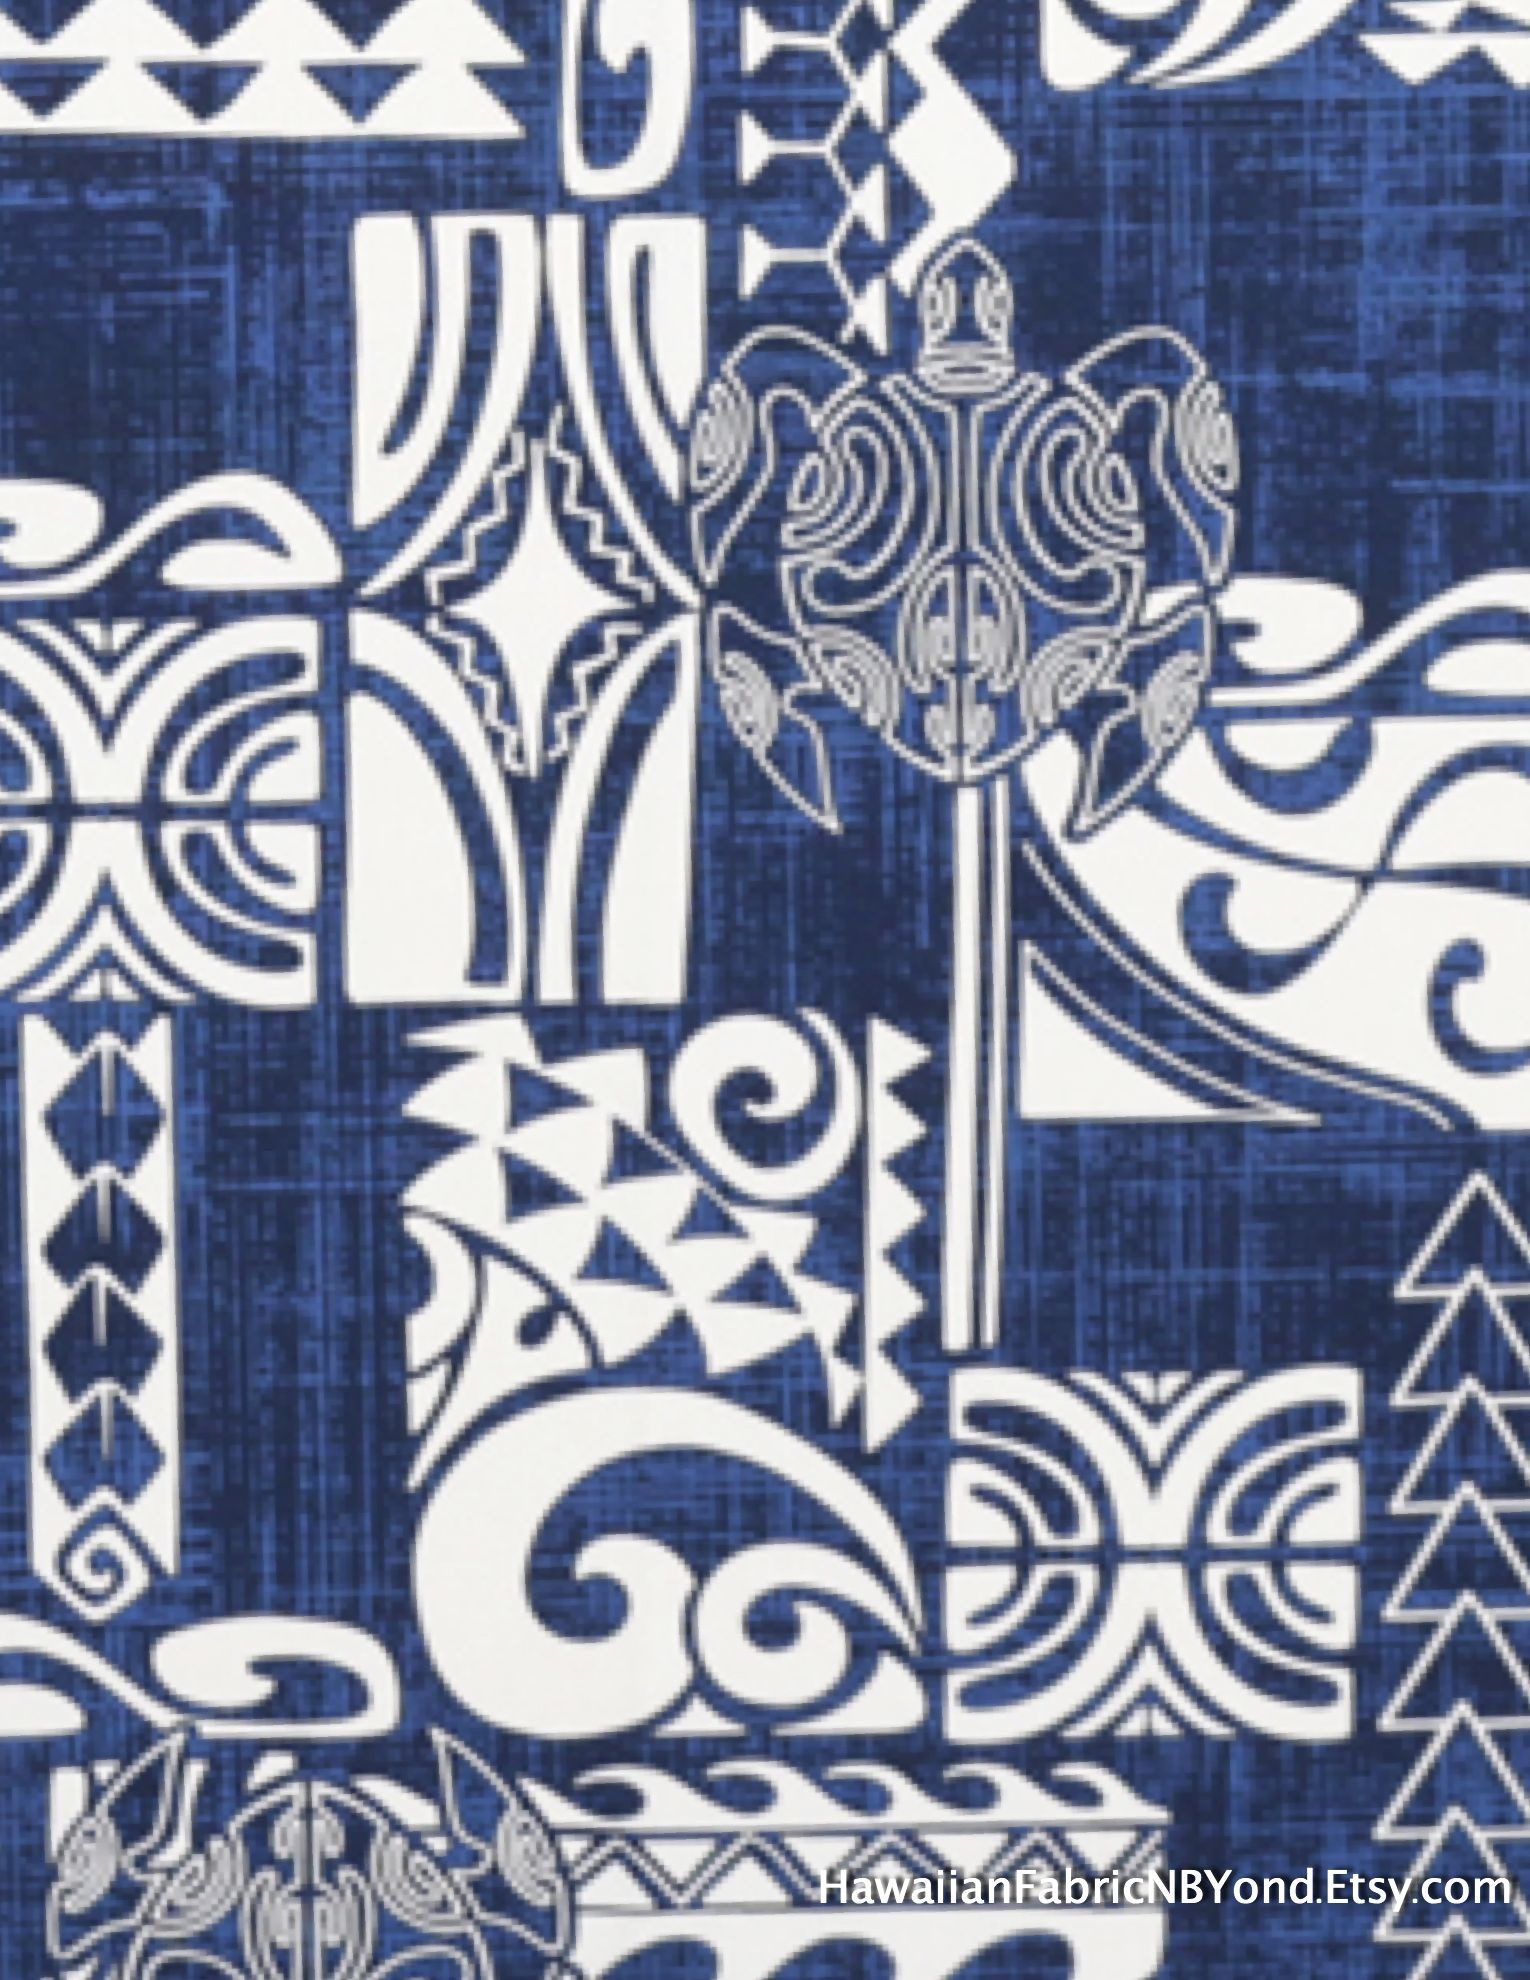 1530x1980 Fabric: Polynesian tribal, petroglyph turtle and swirls on a mesh blue  background. By HawaiianFabricNBYond.Etsy.com